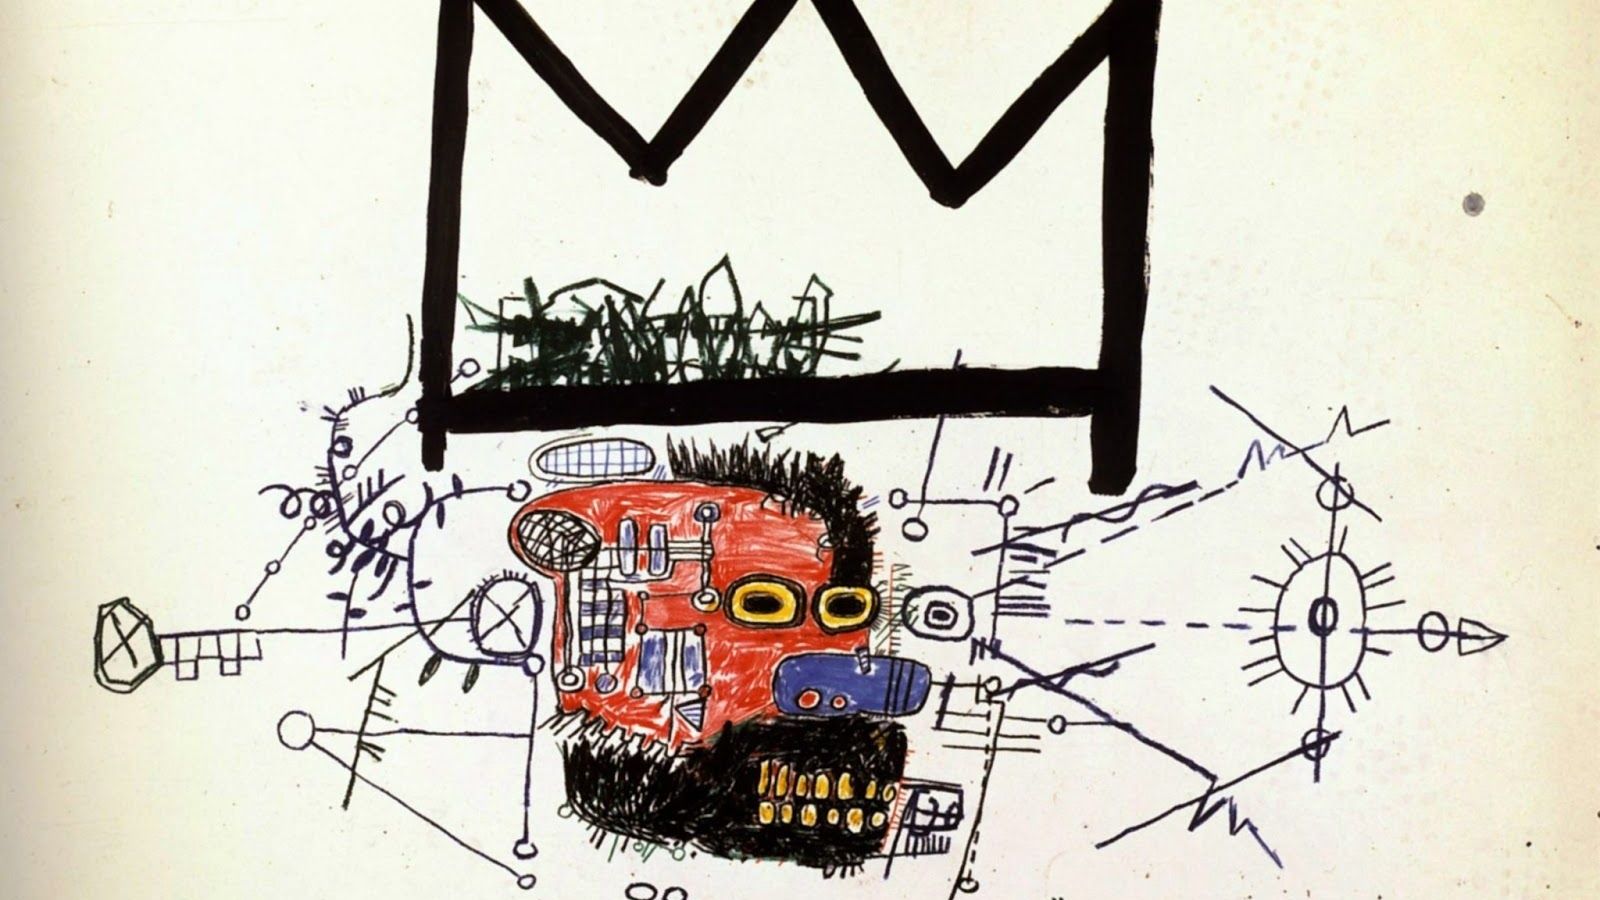 Free download Image For Jean Michel Basquiat Wallpaper Crown